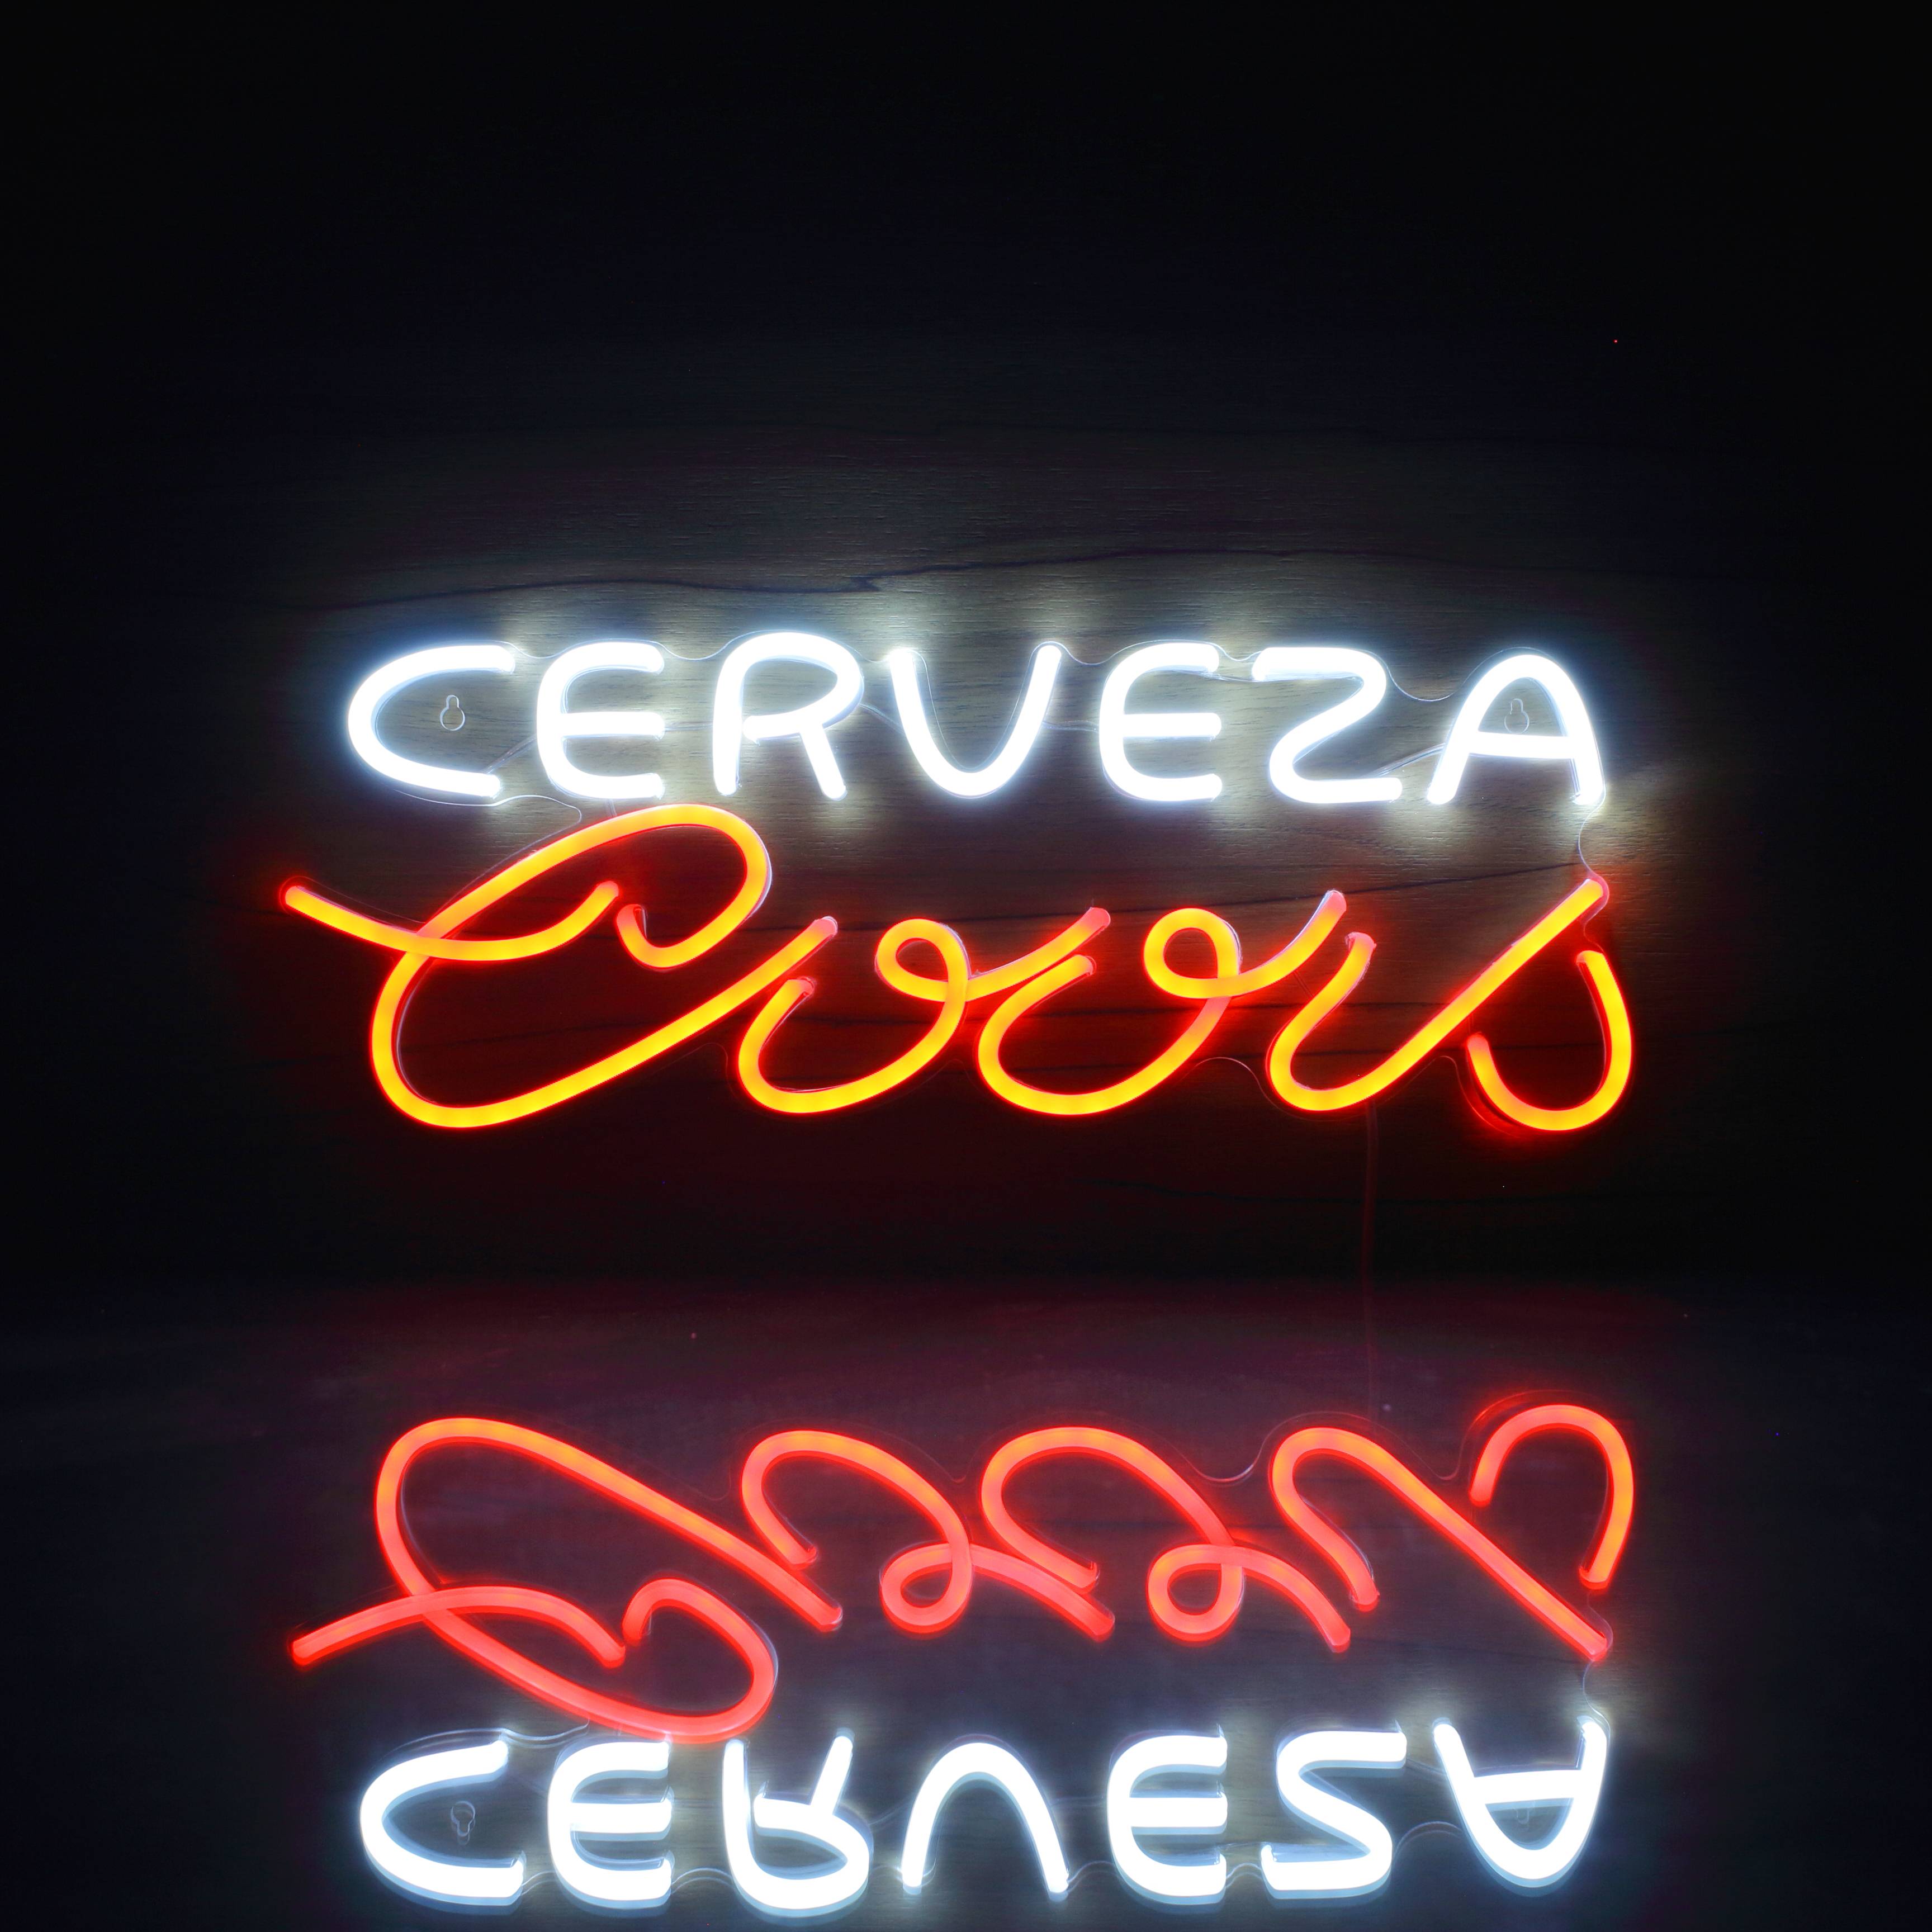 Cerveza Coors Handmade Neon Flex LED Sign